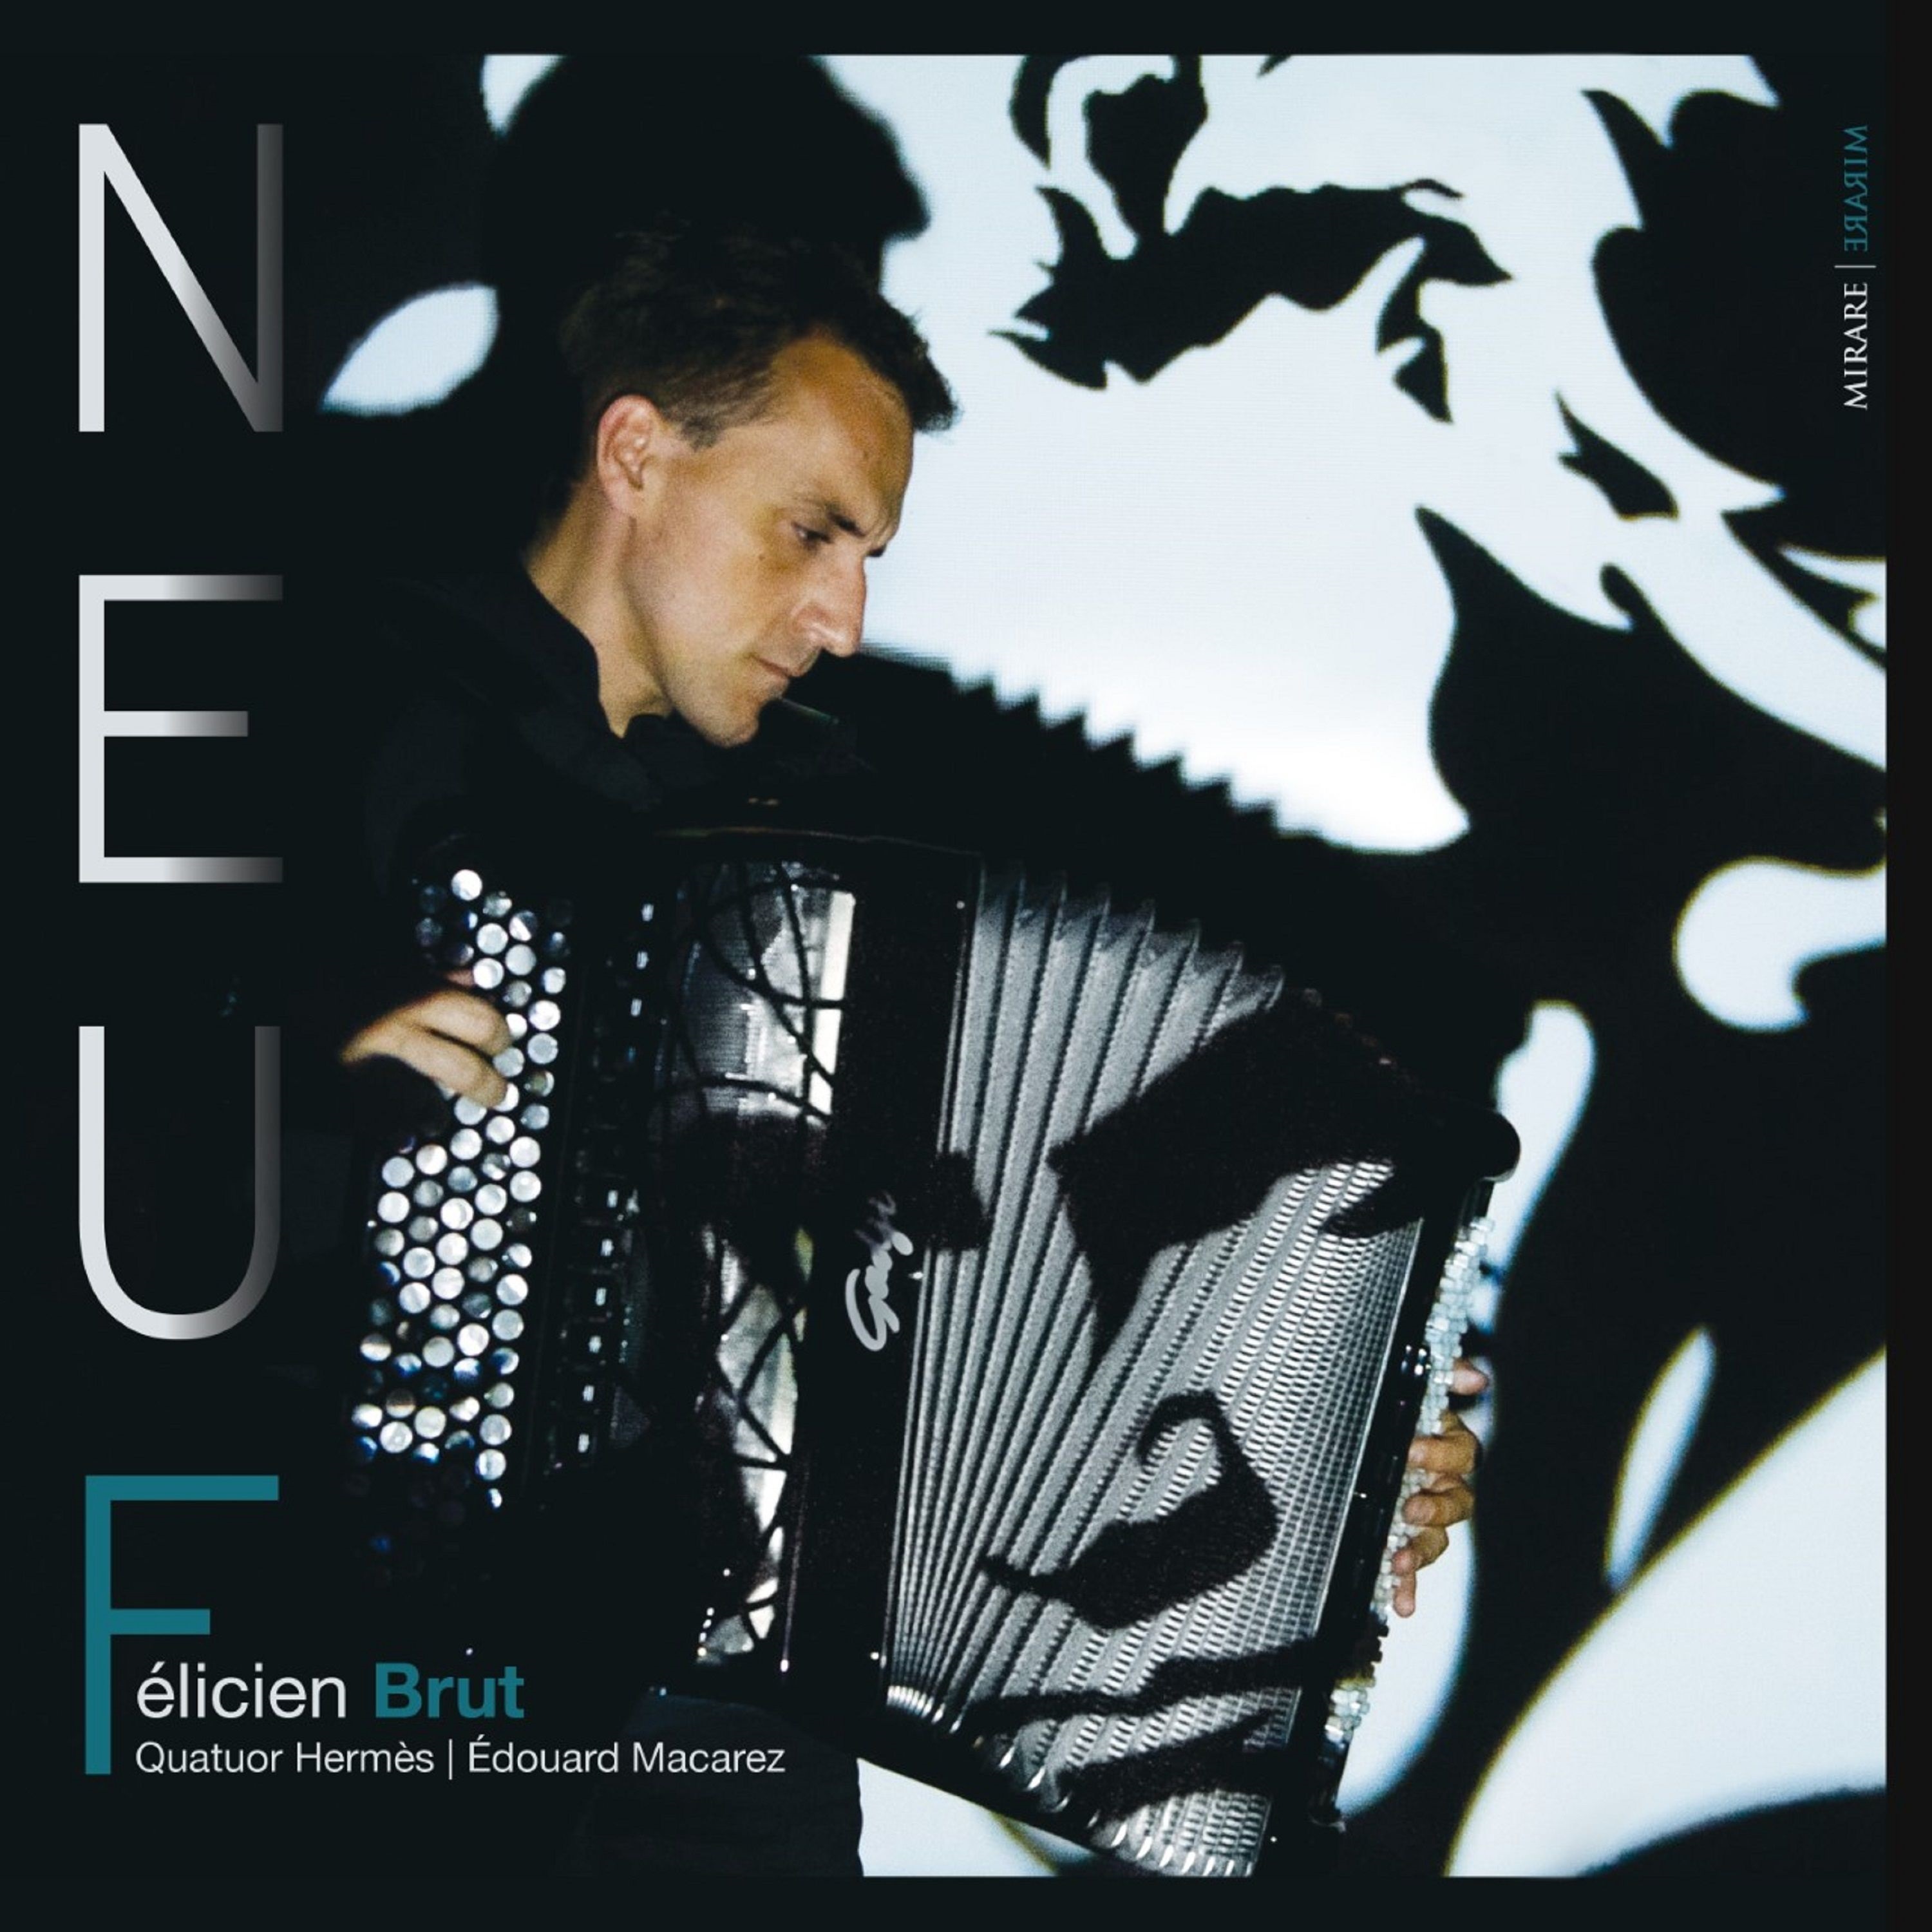 Quatuor Hermes, Felicien Brut & Edouard Macarez – Neuf (2020) [FLAC 24bit/96kHz]